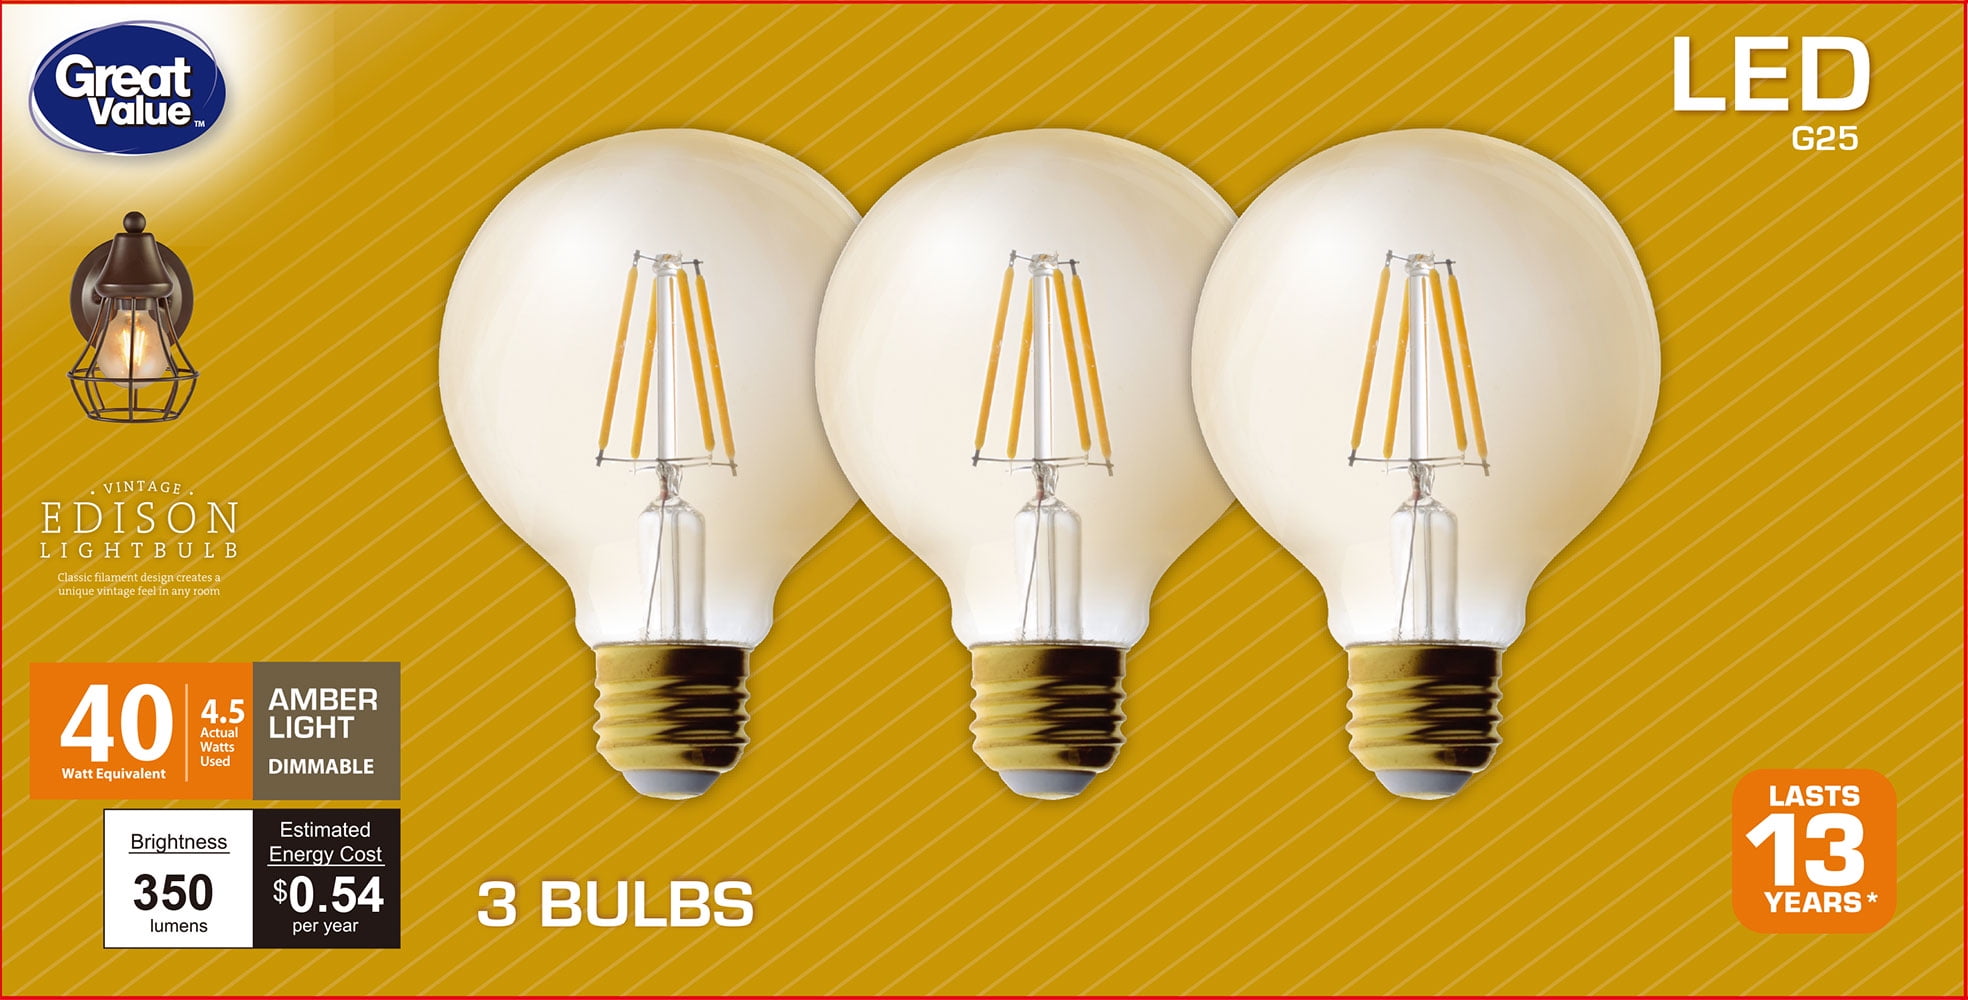 LED Light Bulbs Medium Base 40 Watt Energy Saver Uses Approx 5 Watts Lot of 4 